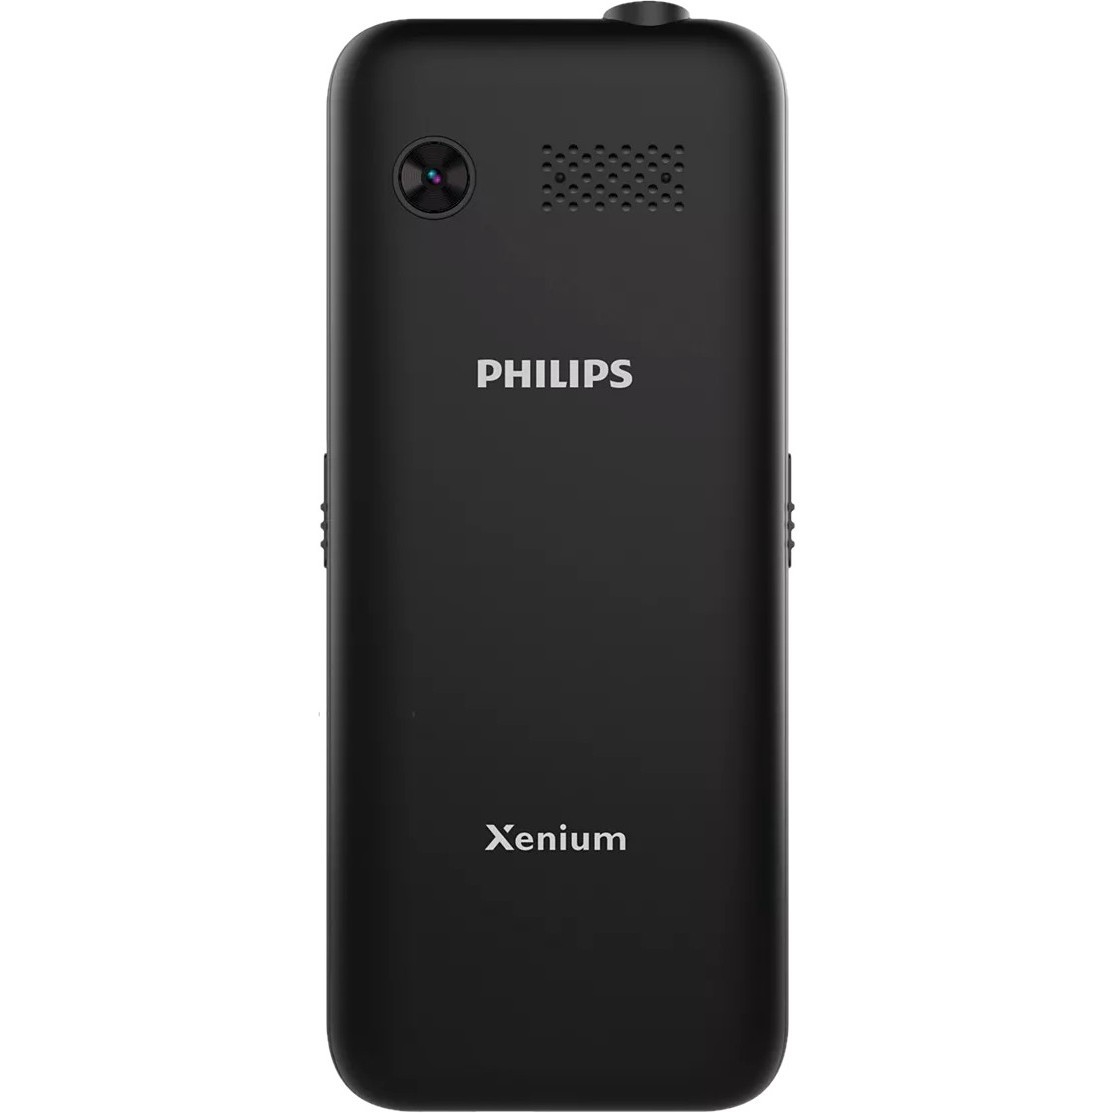 Philips Xenium e116. Philips Xenium e2101 Dual SIM черный. E526. Philips Xenium e218 чехол купить. Xenium e185 black